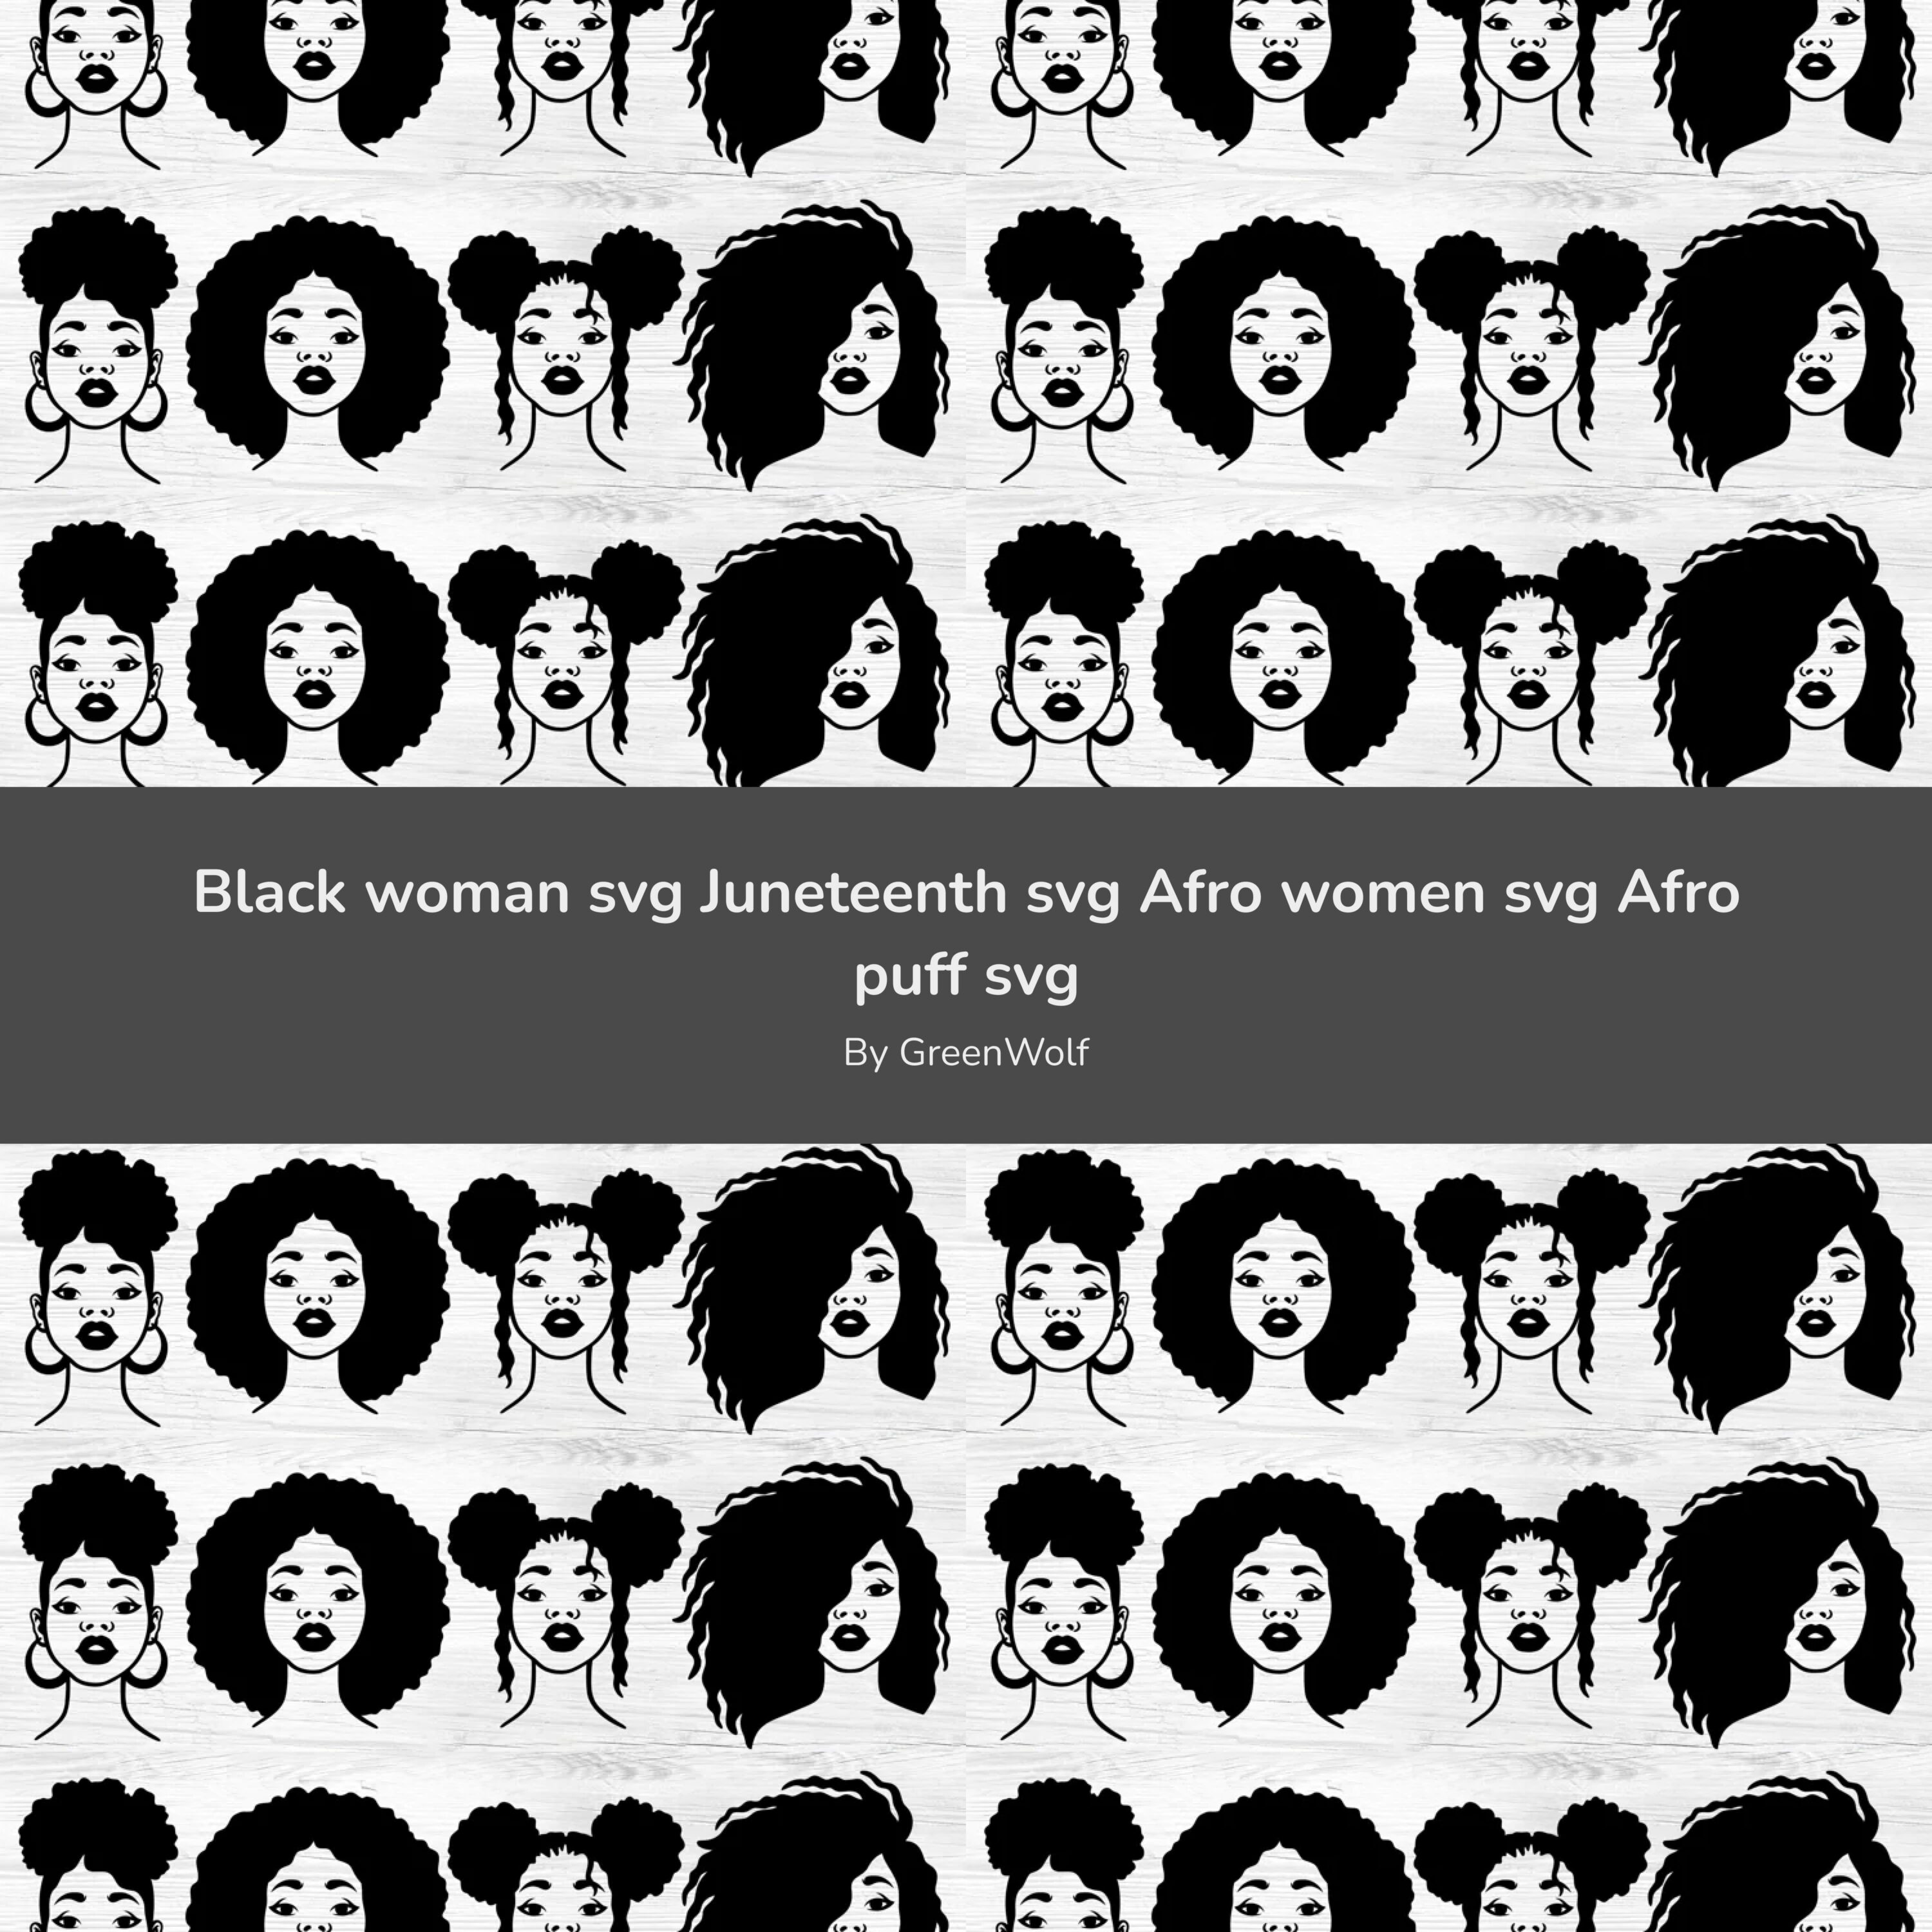 Black woman svg - main image preview.